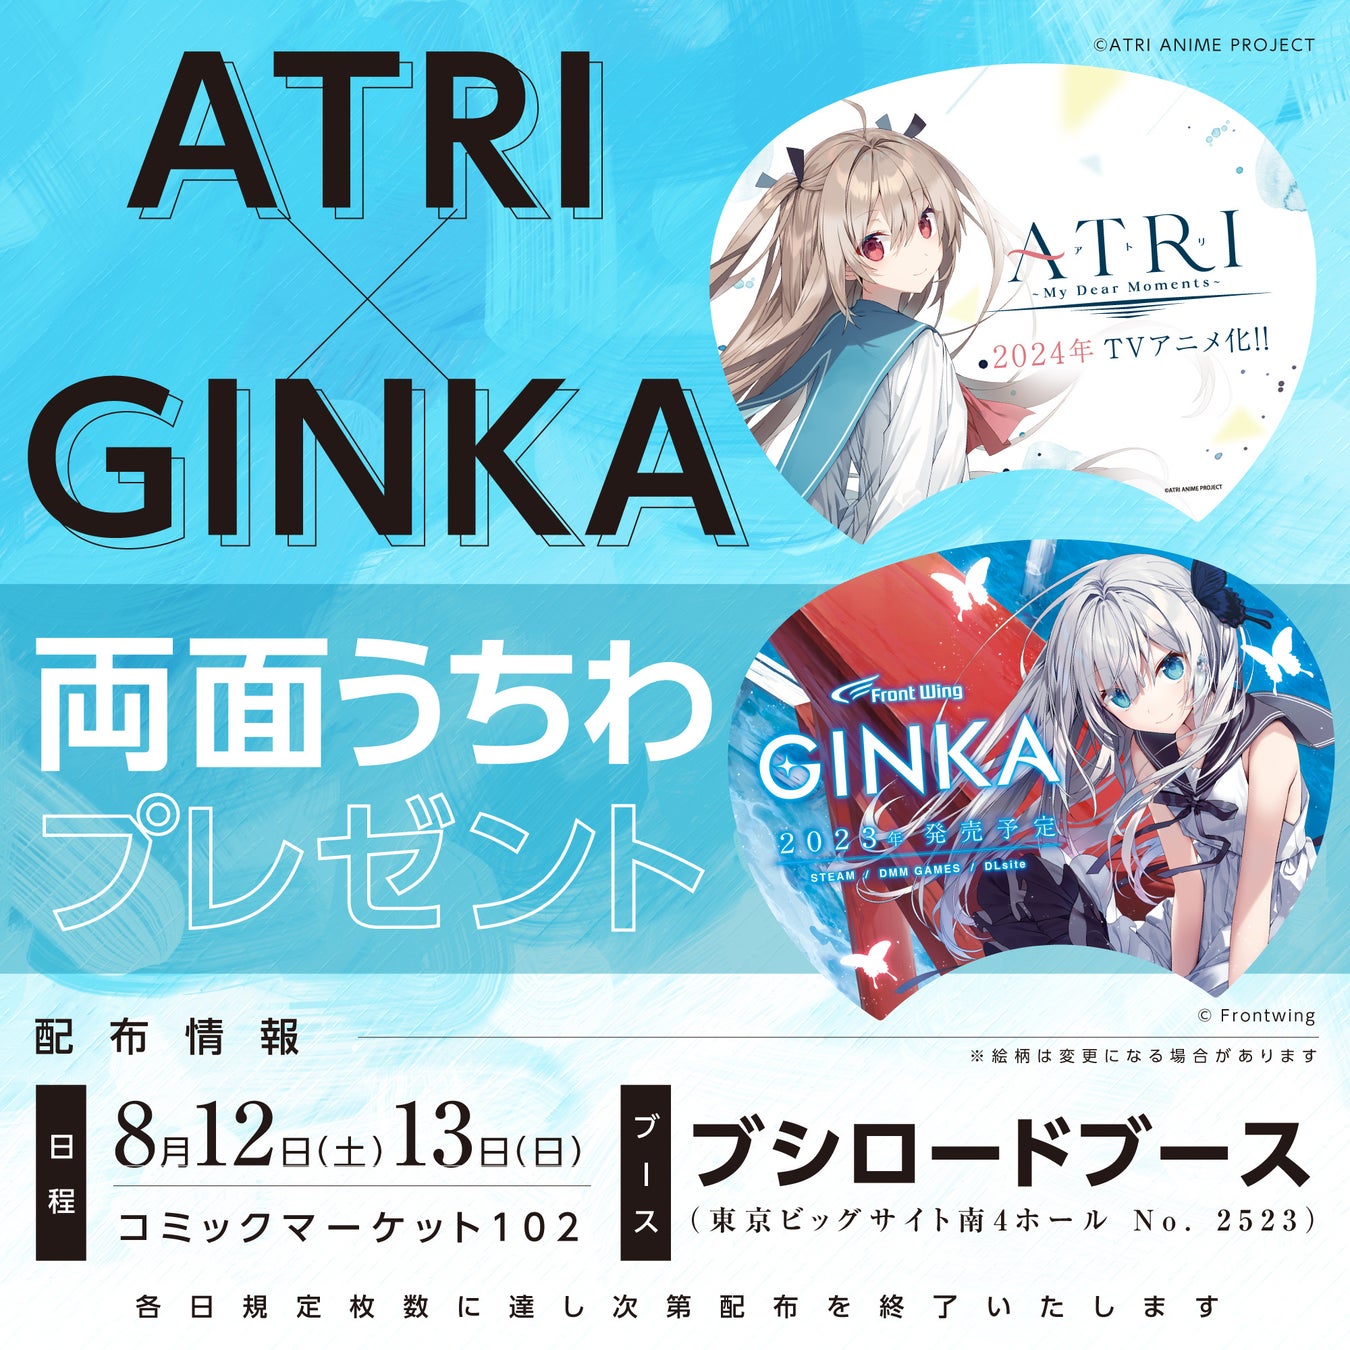 『GINKA』×『ATRI』の無料うちわが夏コミで配布！PCゲーム『GINKA』DL販売サイトが決定！『グリザイア』×『GINKA』グッズが当たるキャンペーンがスタート！